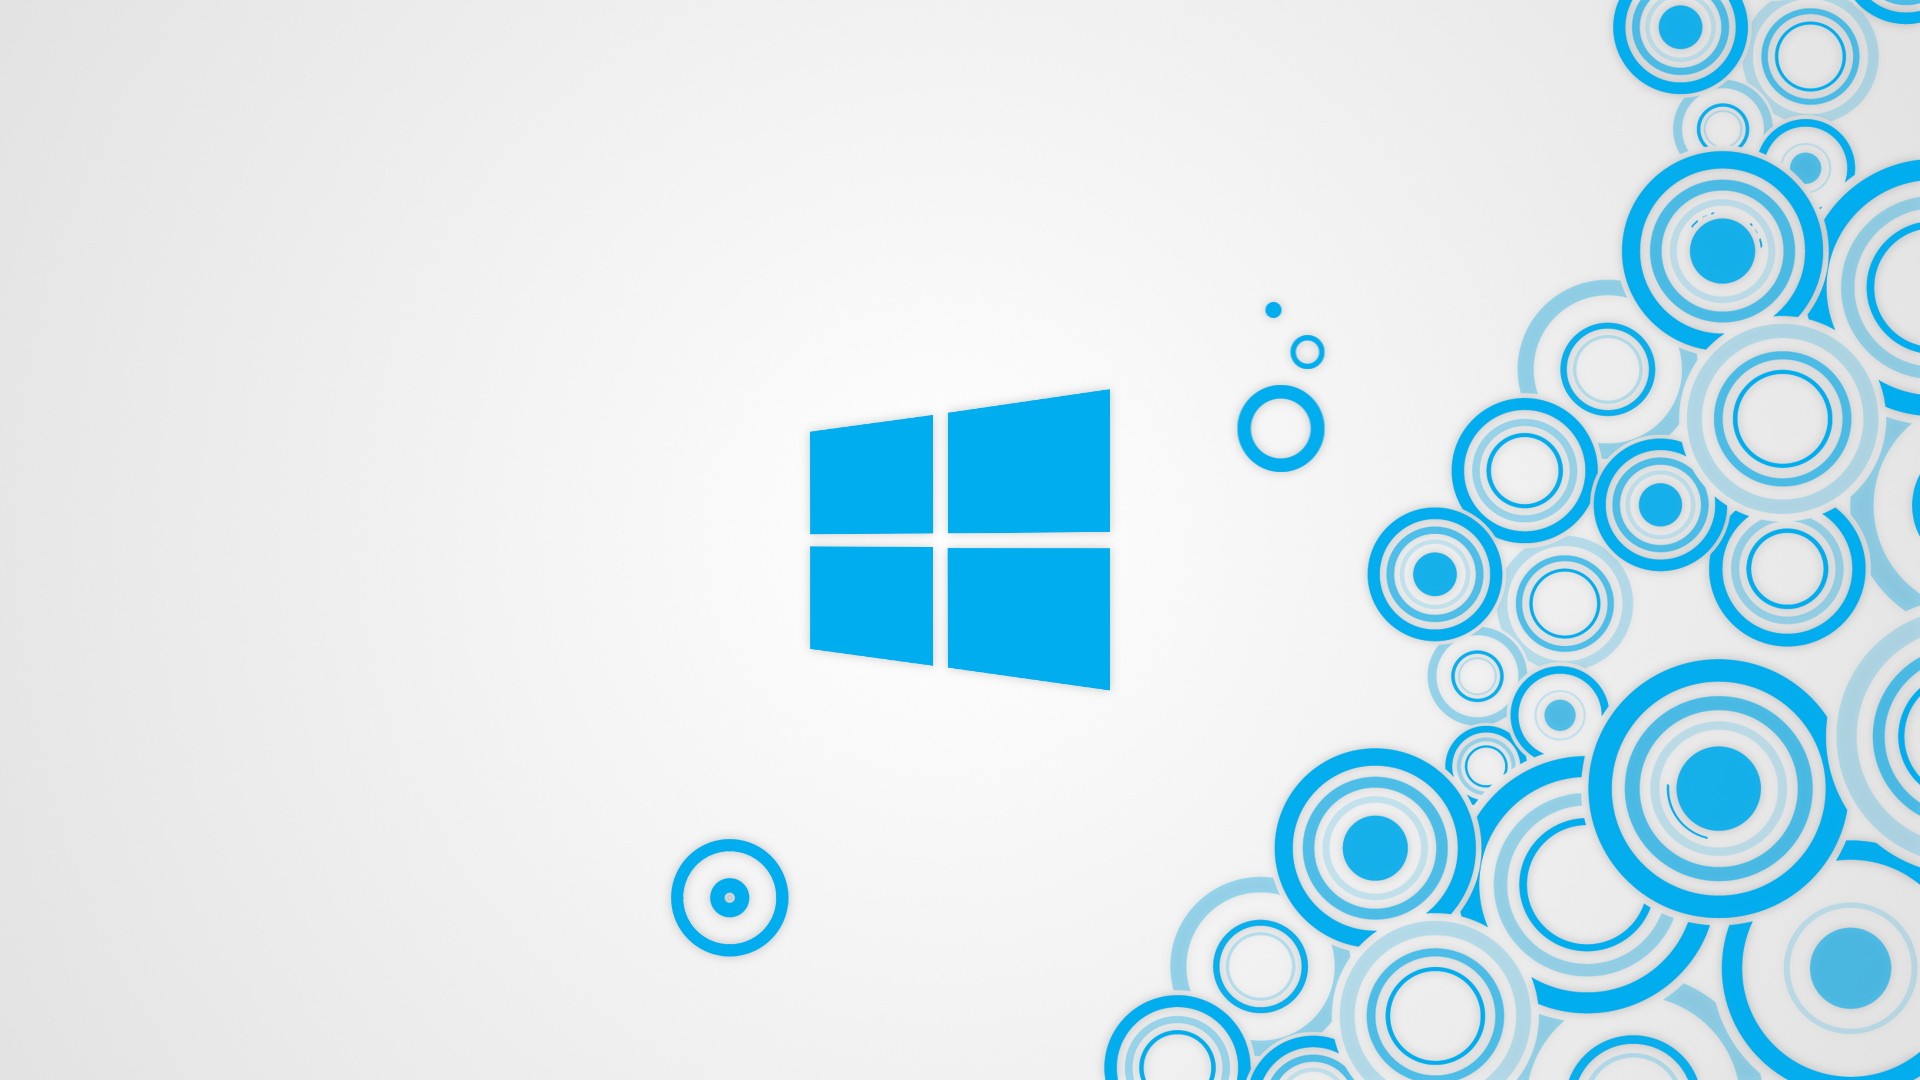 General 1920x1080 Windows 8 minimalism circle simple background blue cyan logo Microsoft white background white operating system